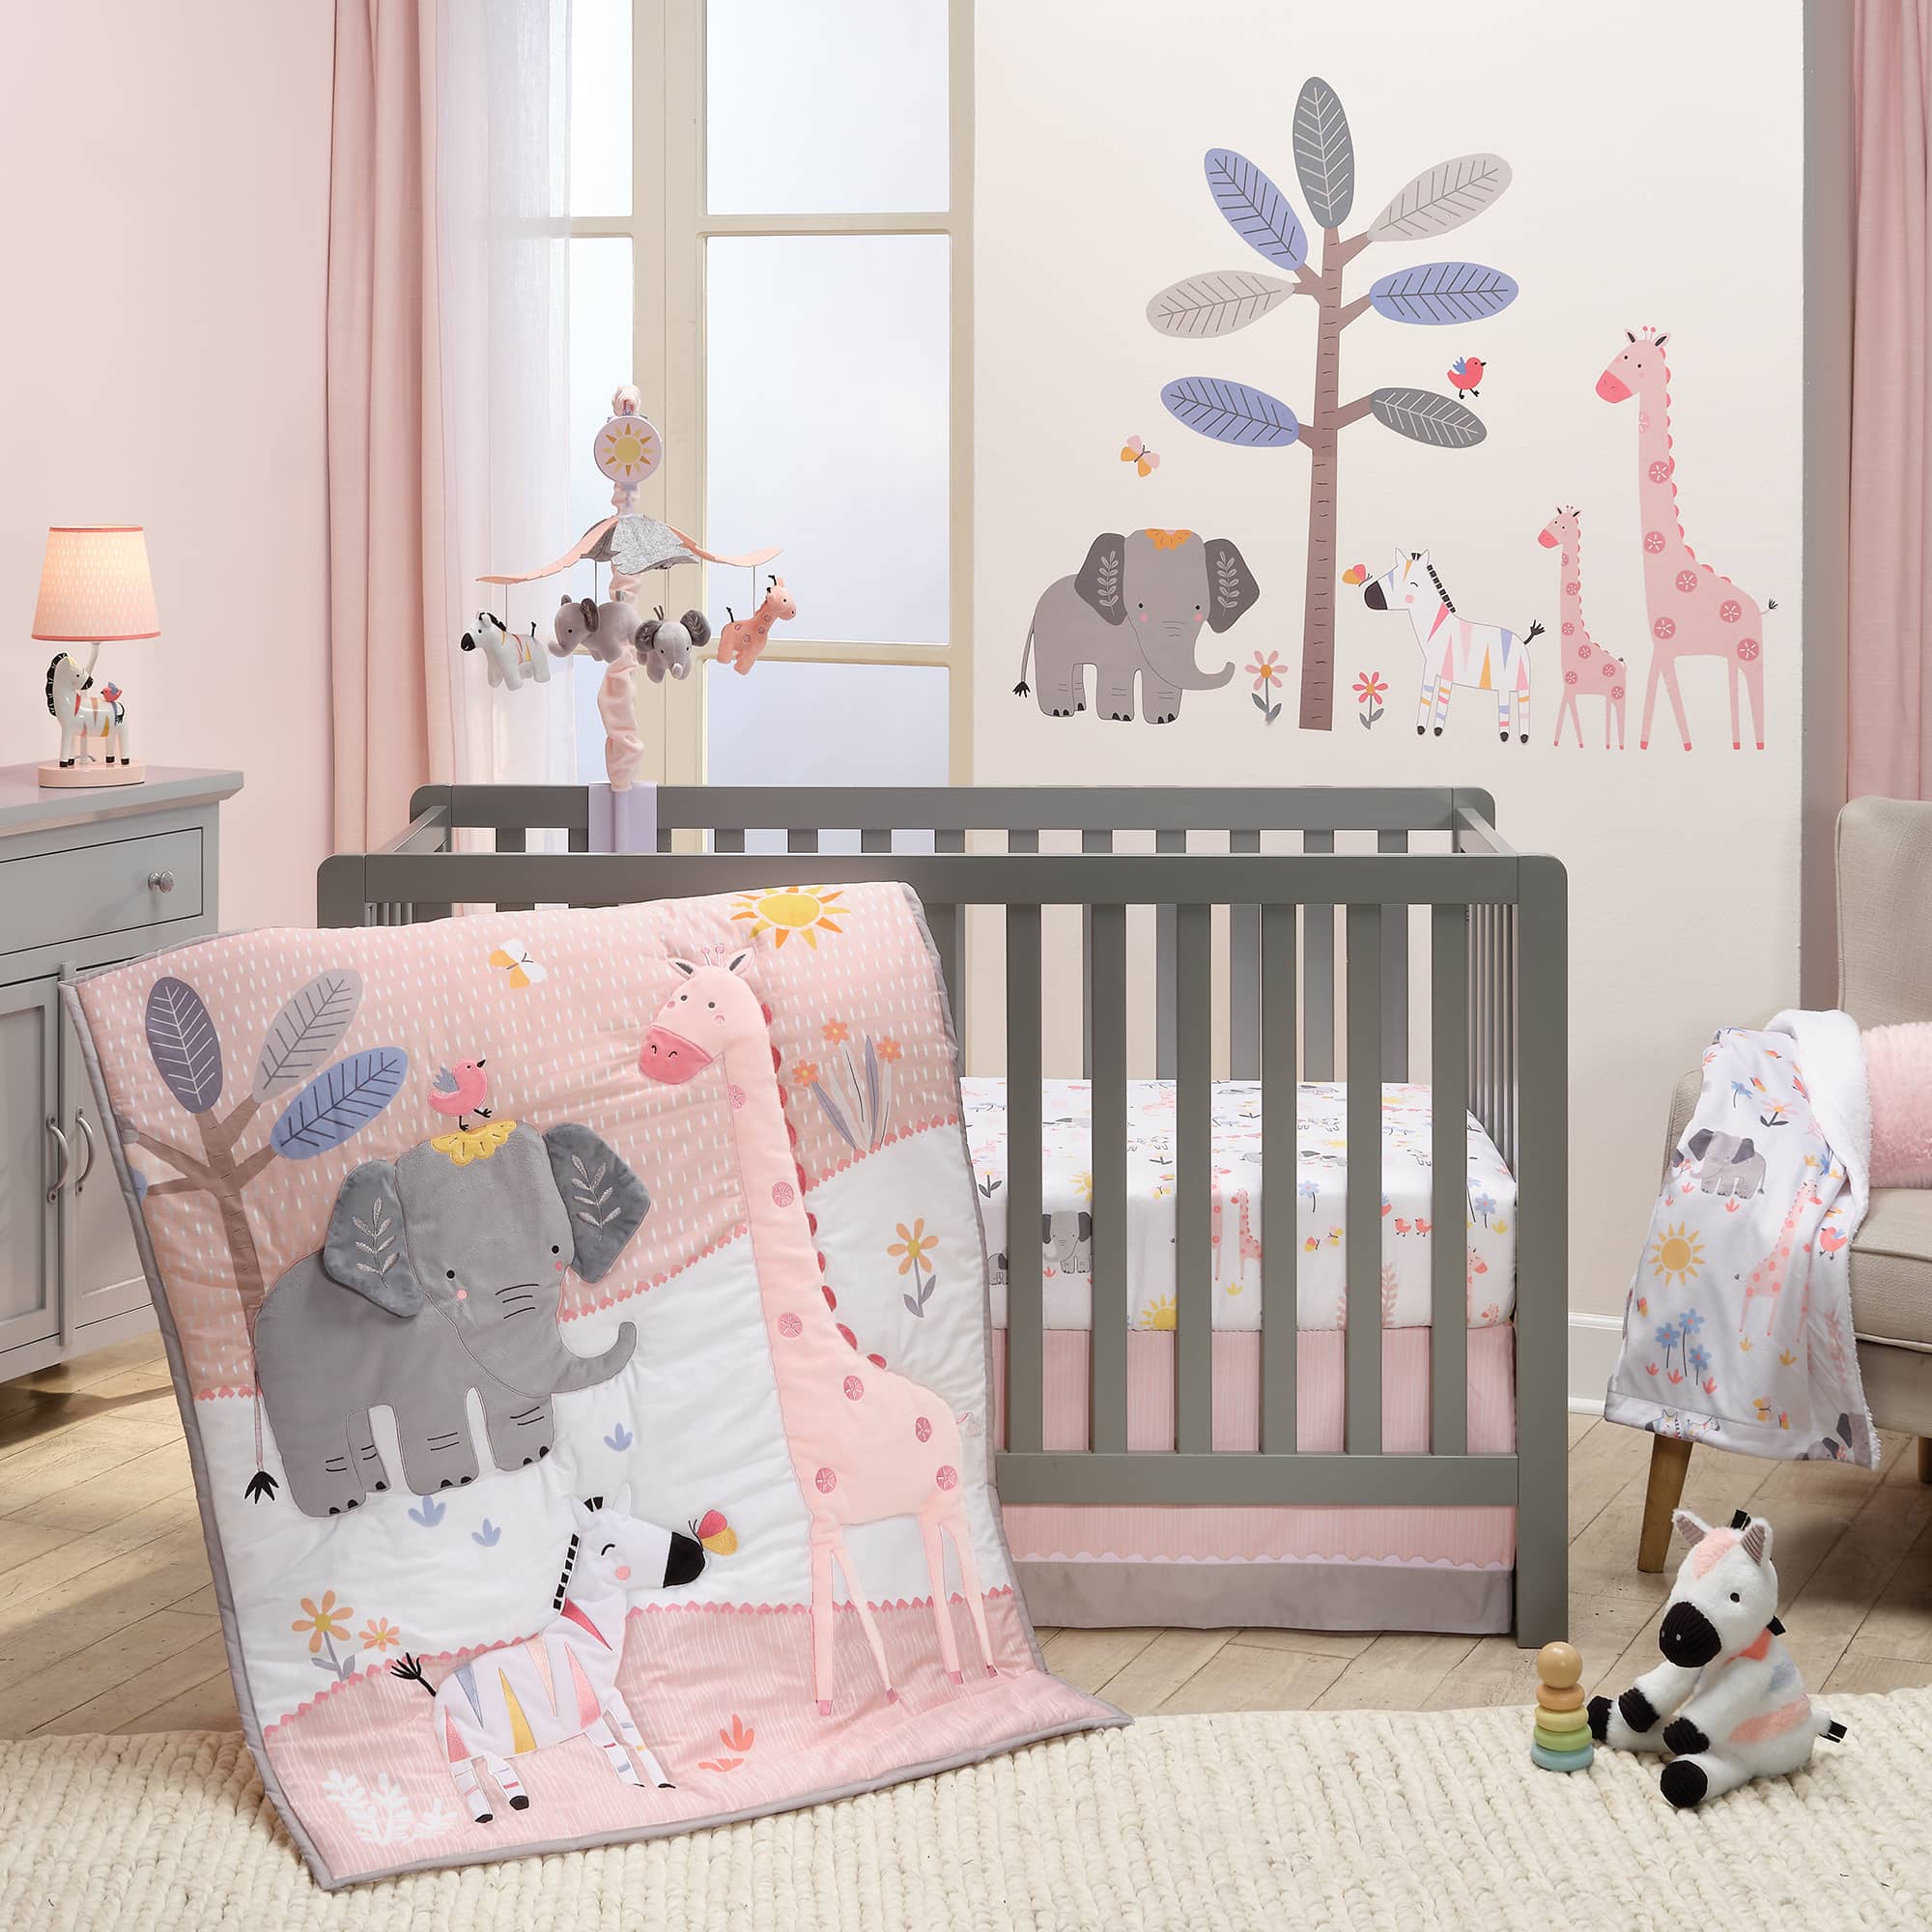 Baby Bedding | Shop Crib Bedding, Nursery Decor, & Baby Gifts Online -  Lambs & Ivy